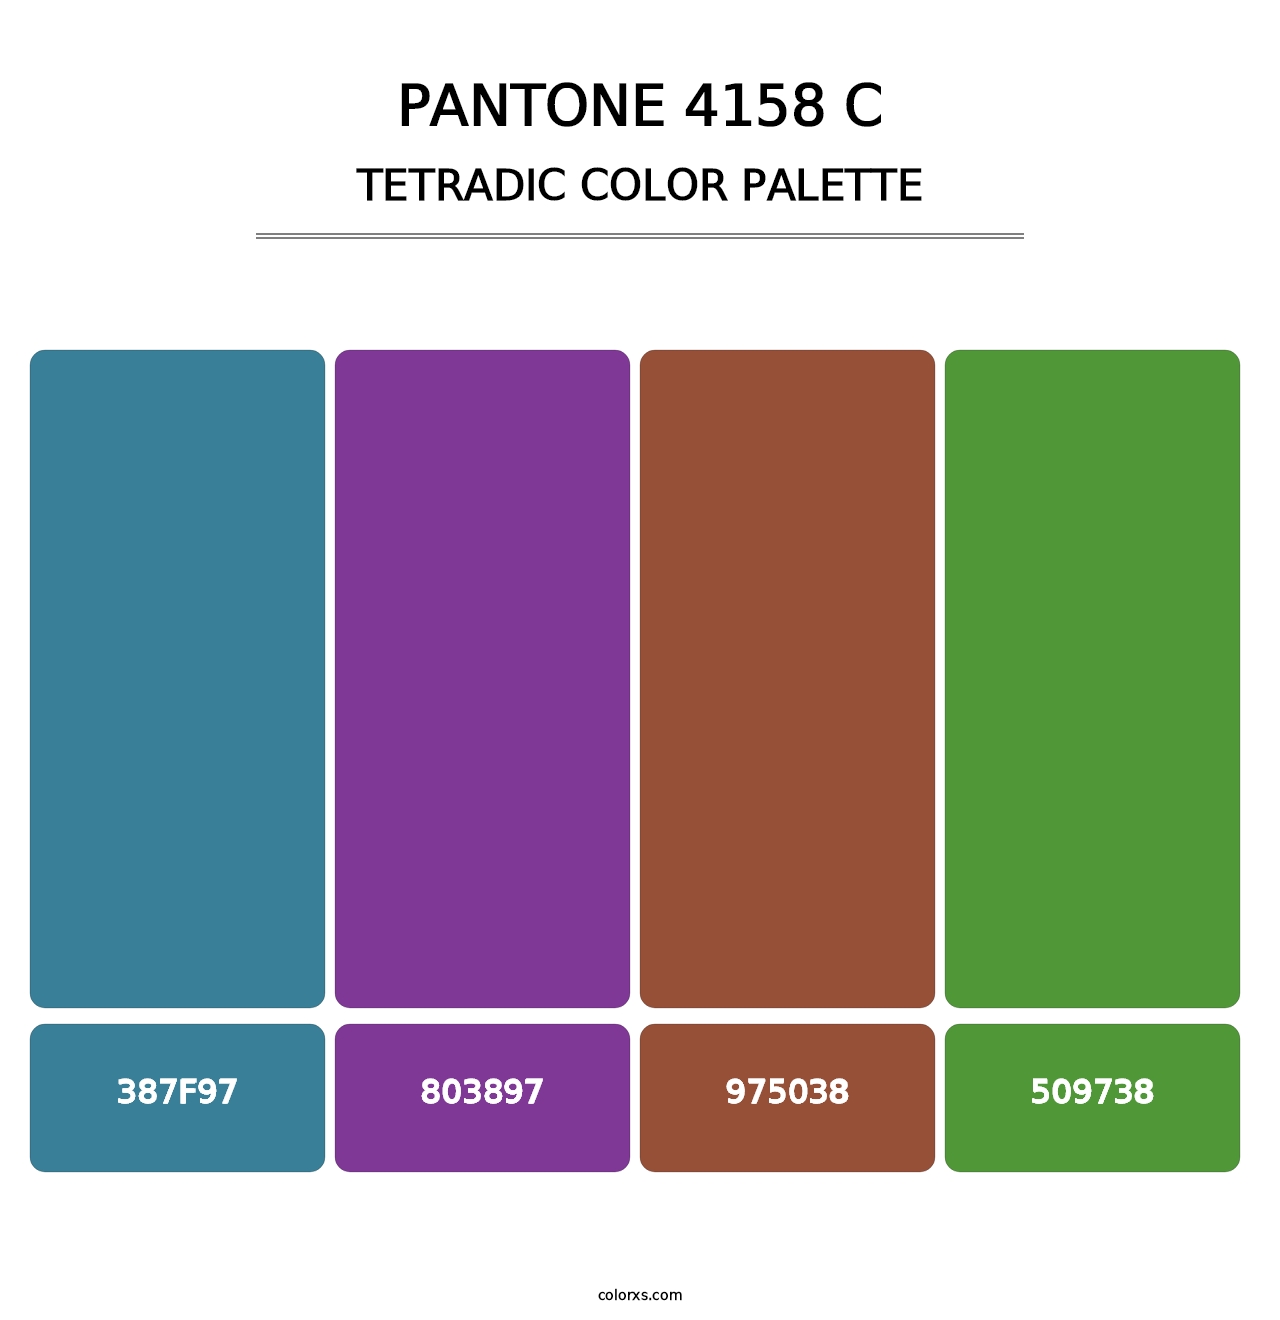 PANTONE 4158 C - Tetradic Color Palette